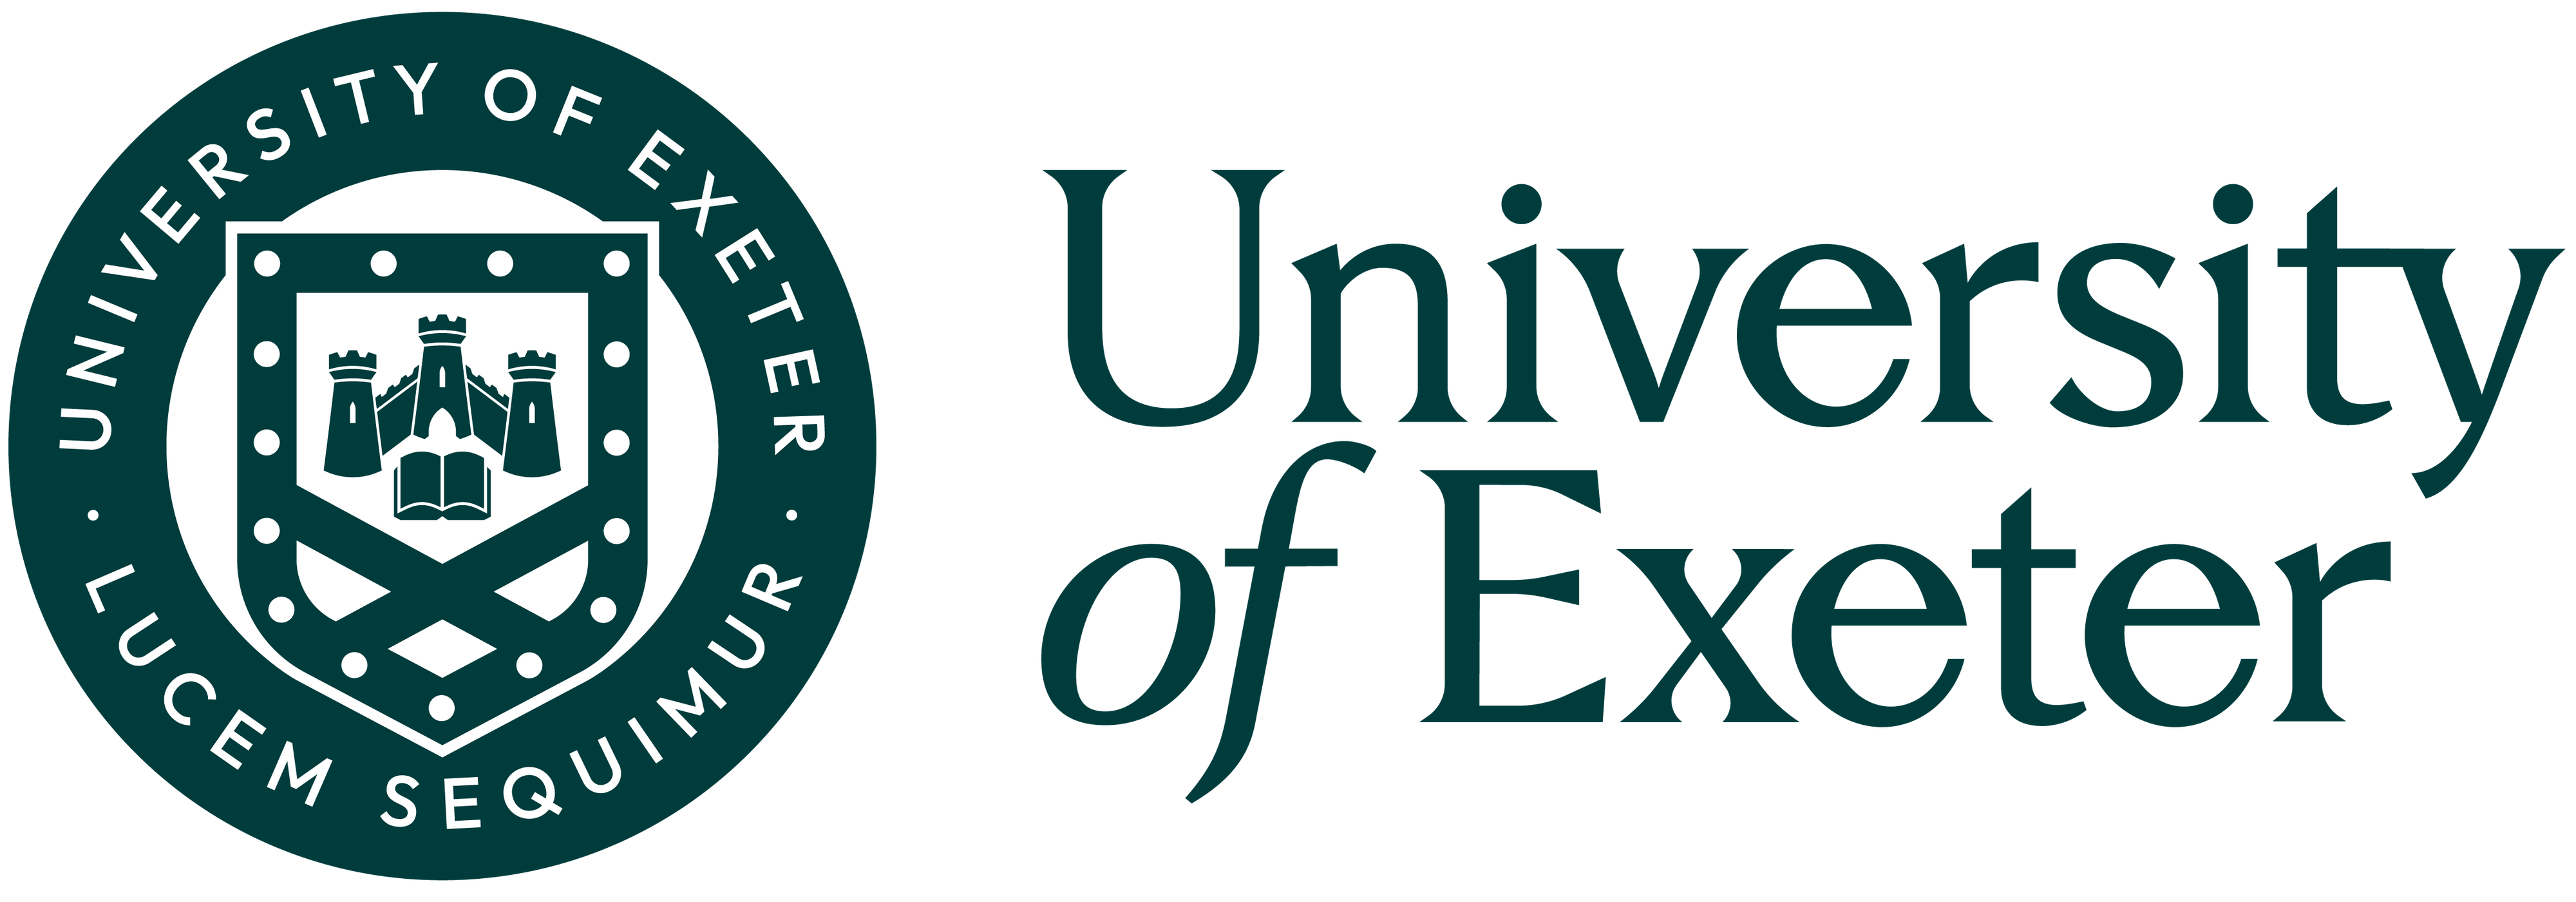 university of exeter crest logo